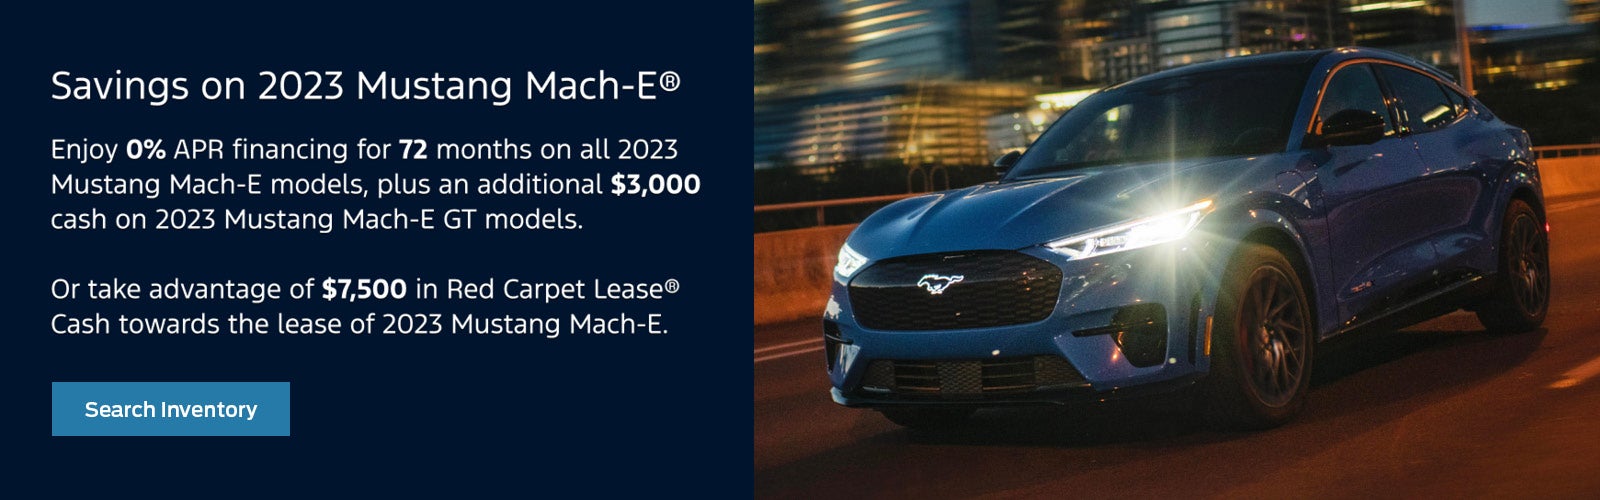 Savings on 2023 Mustang Mach-E